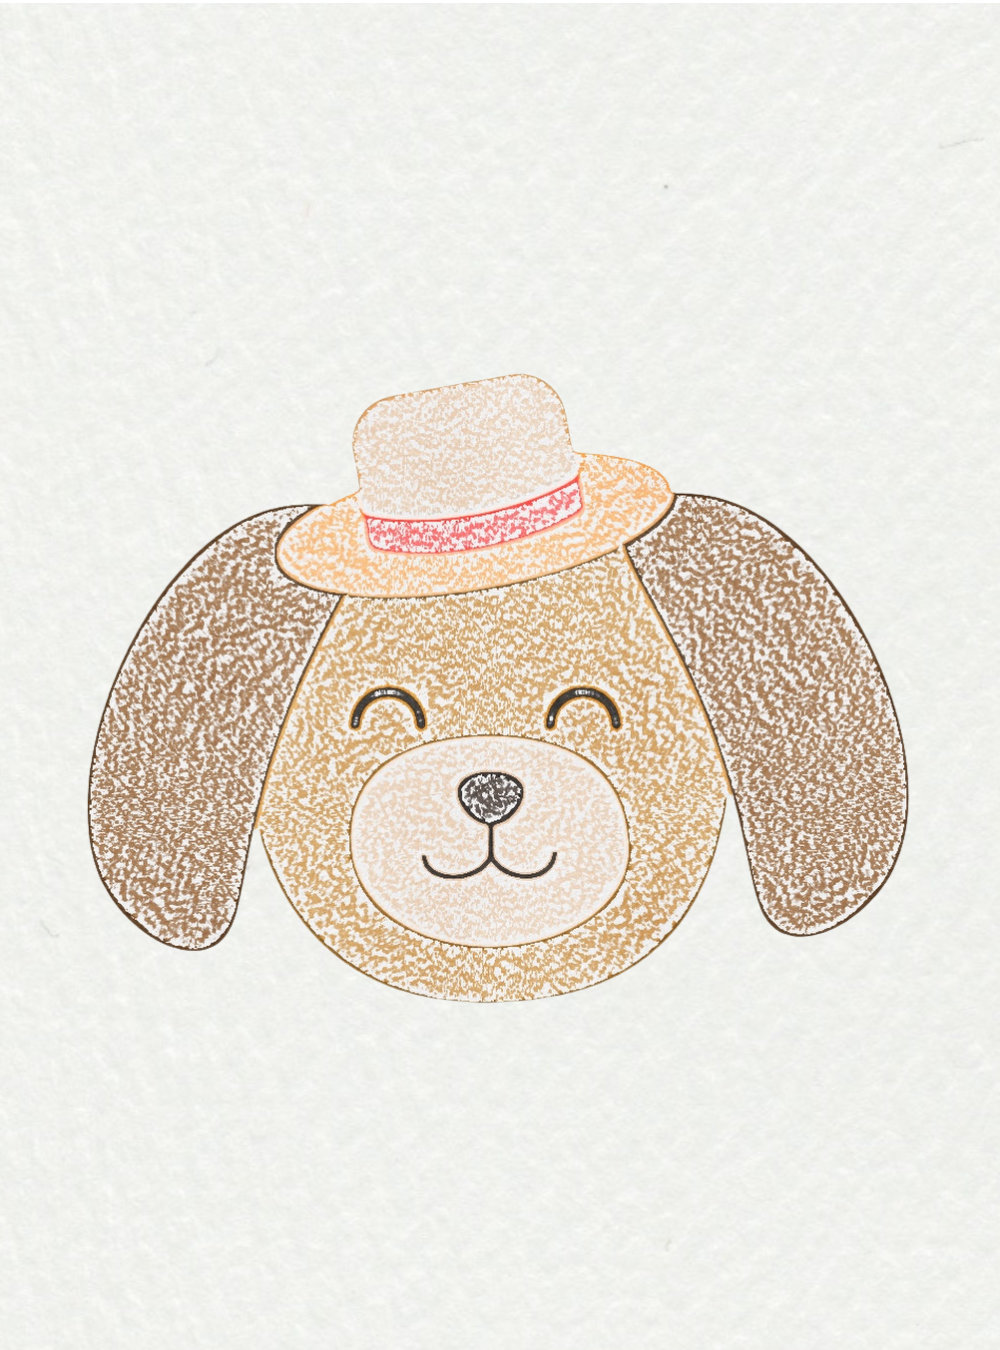 Easy Cute Dog Drawing Ideas: Dog In A Hat